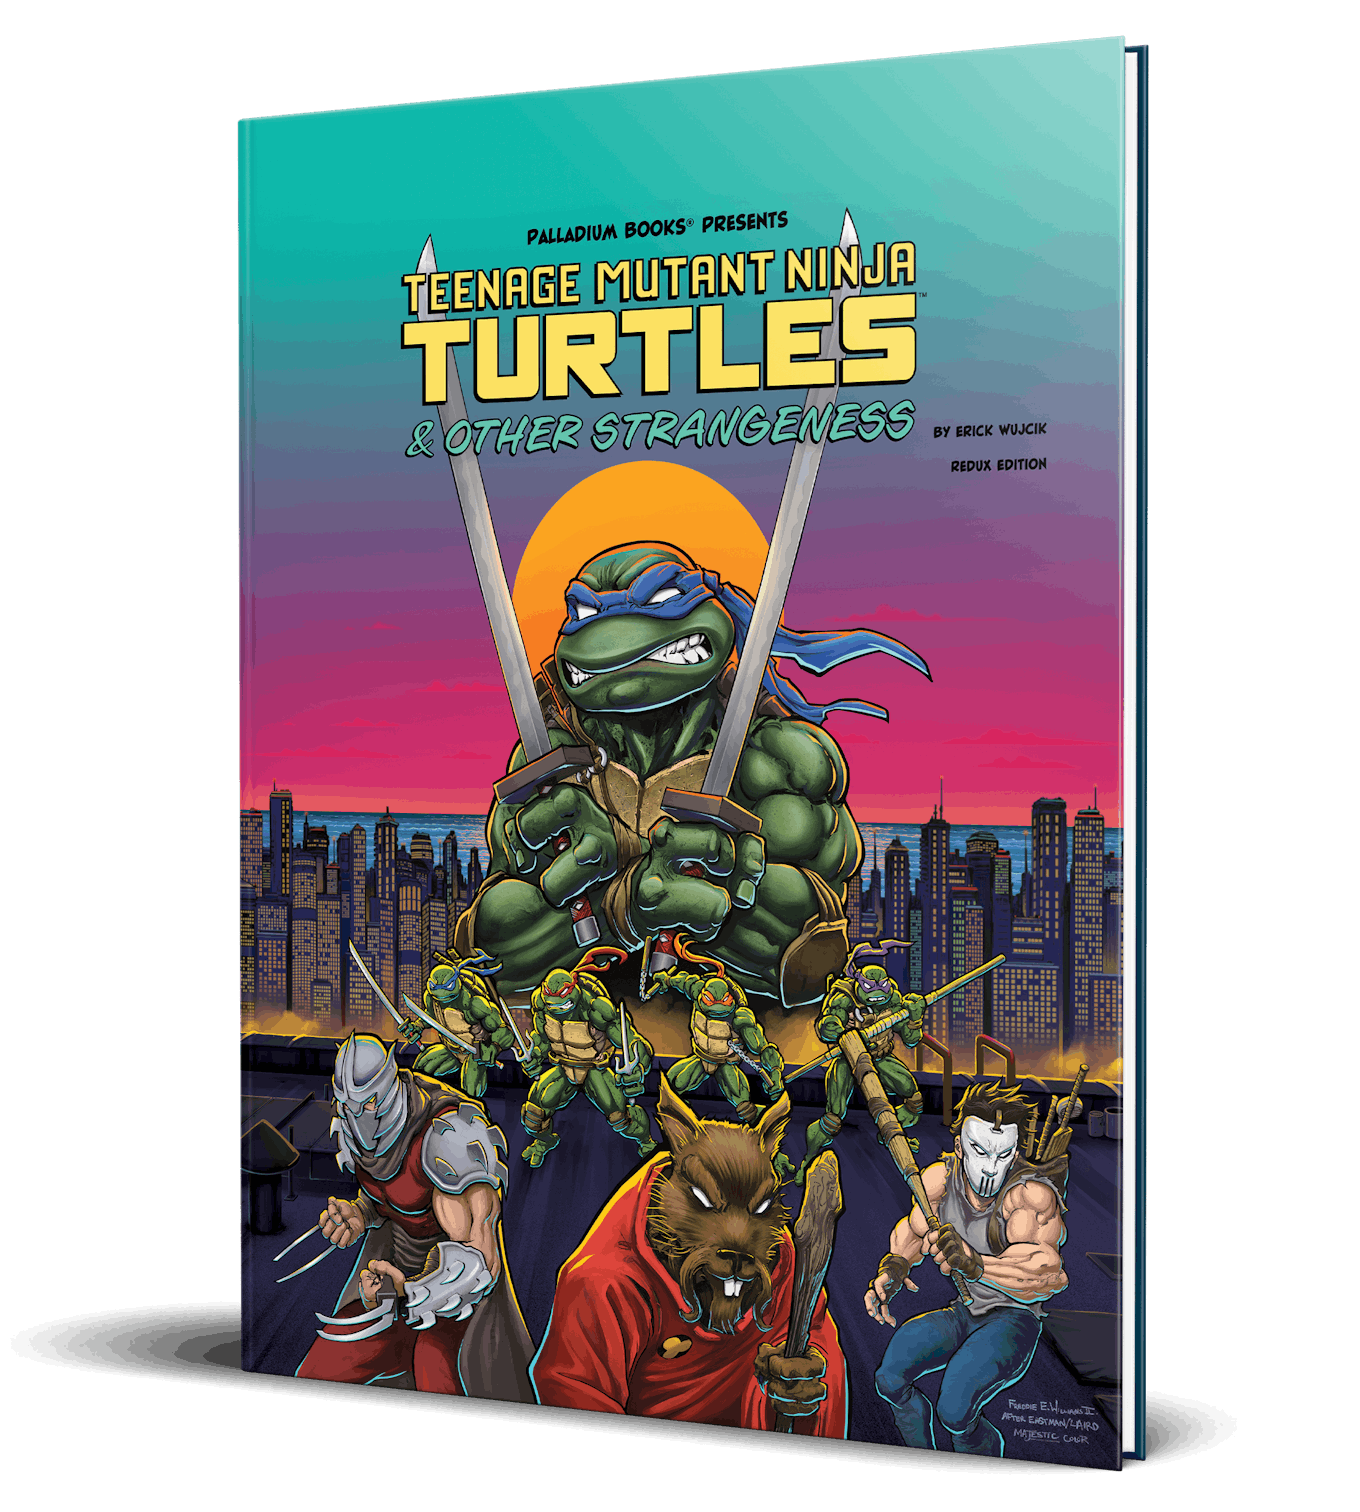 Ninja Turtles: A Timeless Pop Culture Phenomenon - Hook Research